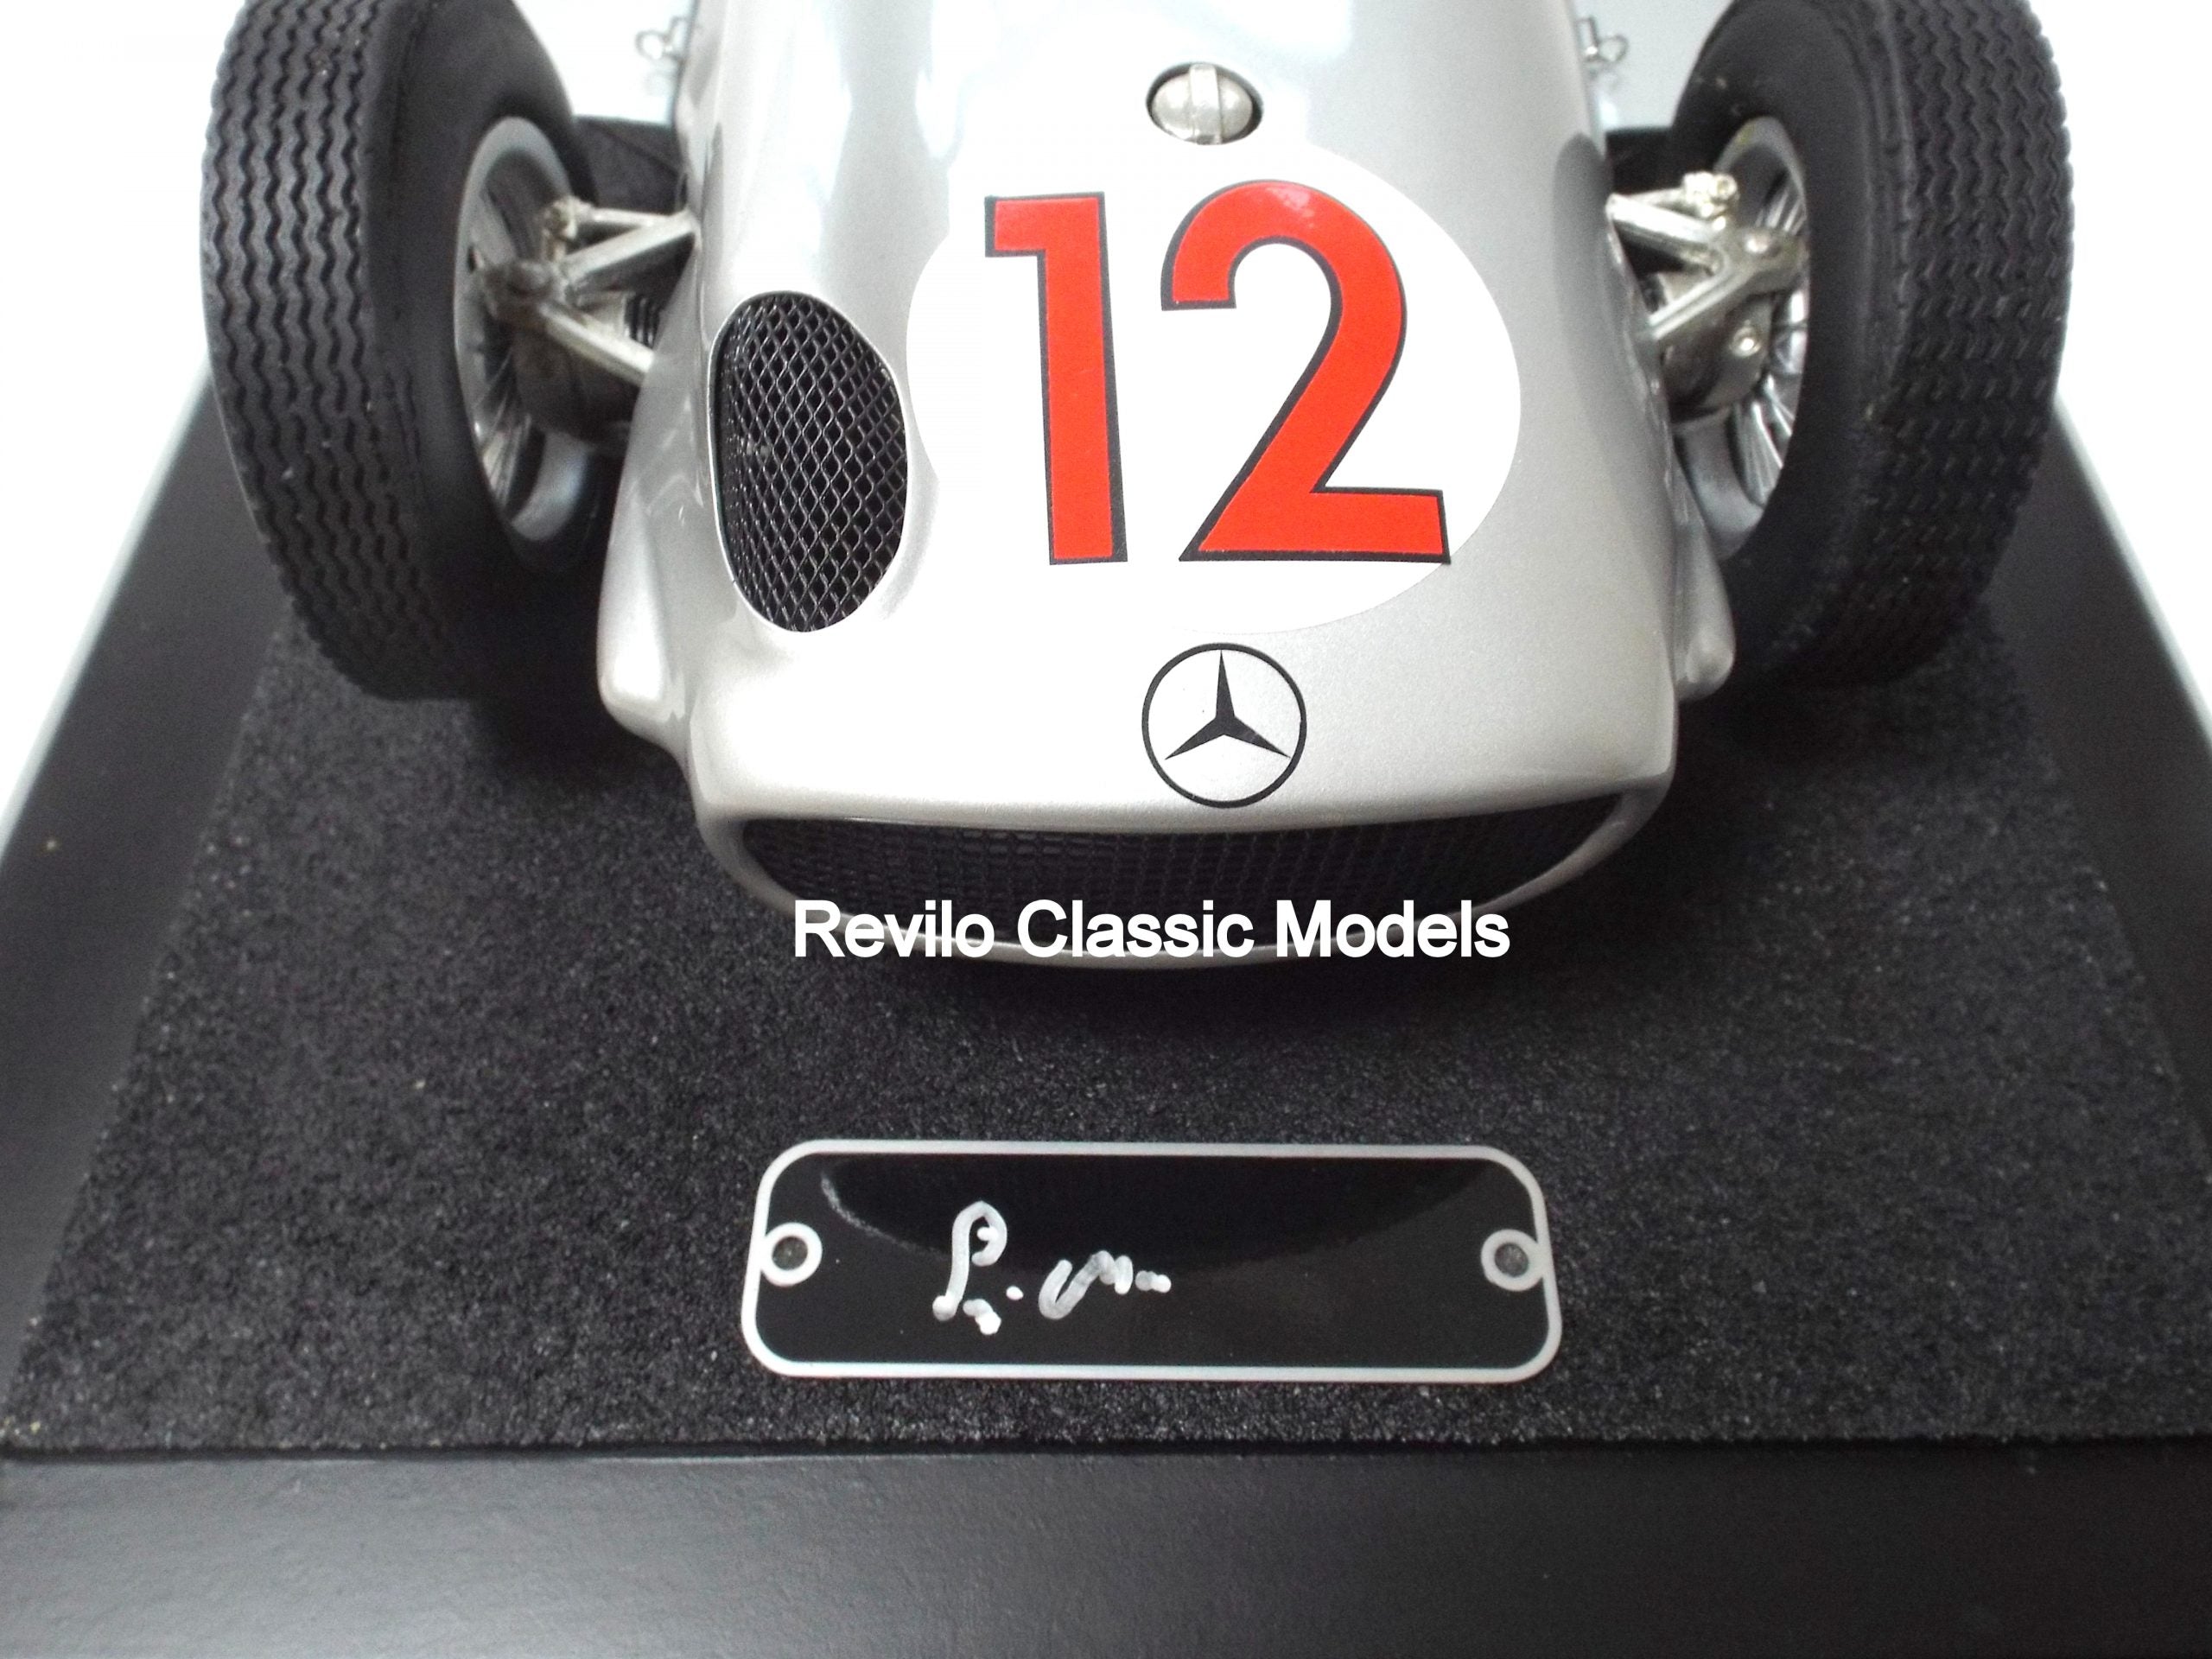 Javan Smith 1:8 scale Mercedes W196